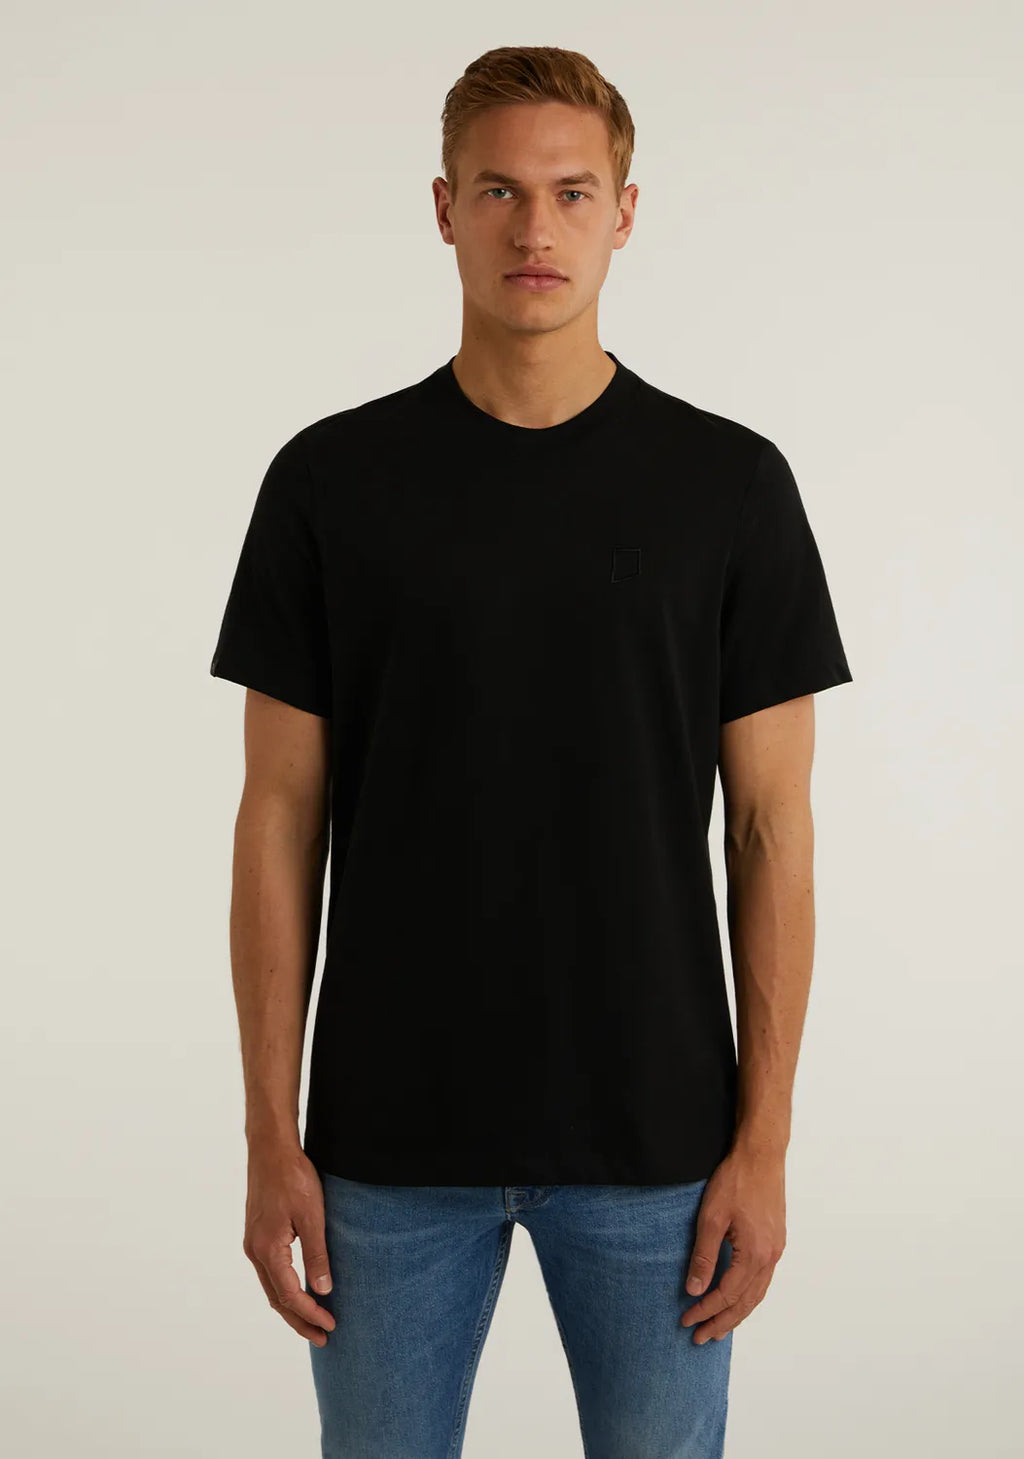 Shop Yeans – T-Shirts Online Halle